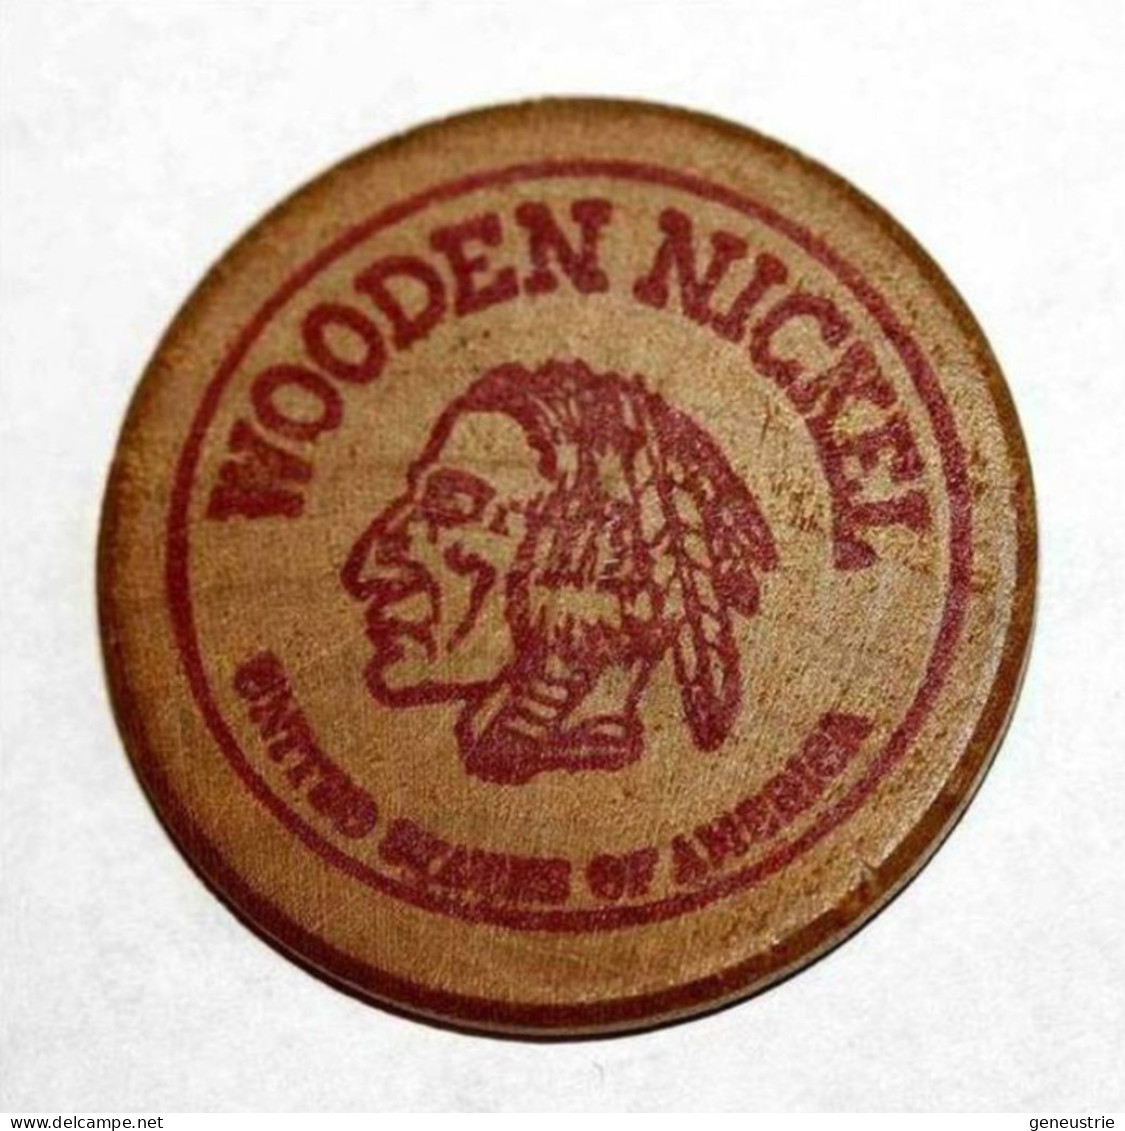 Wooden Token 1$ - Wooden Nickel - Jeton Bois Monnaie Nécessité - Tête D'Indien - One Dollar - Etats-Unis - Noodgeld